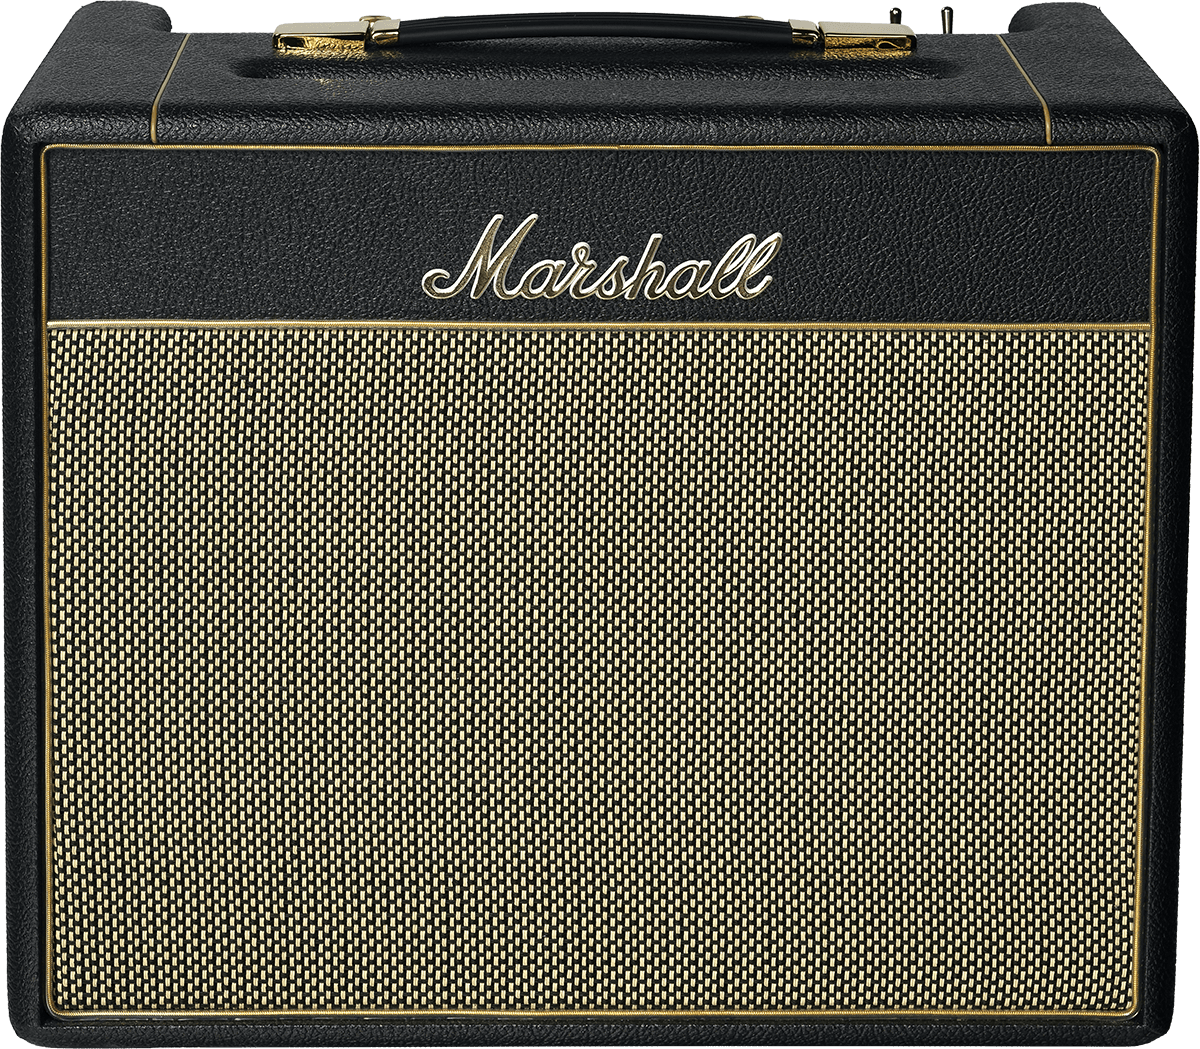 Marshall Studio Vintage Combo 20w - Electric guitar combo amp - Variation 1